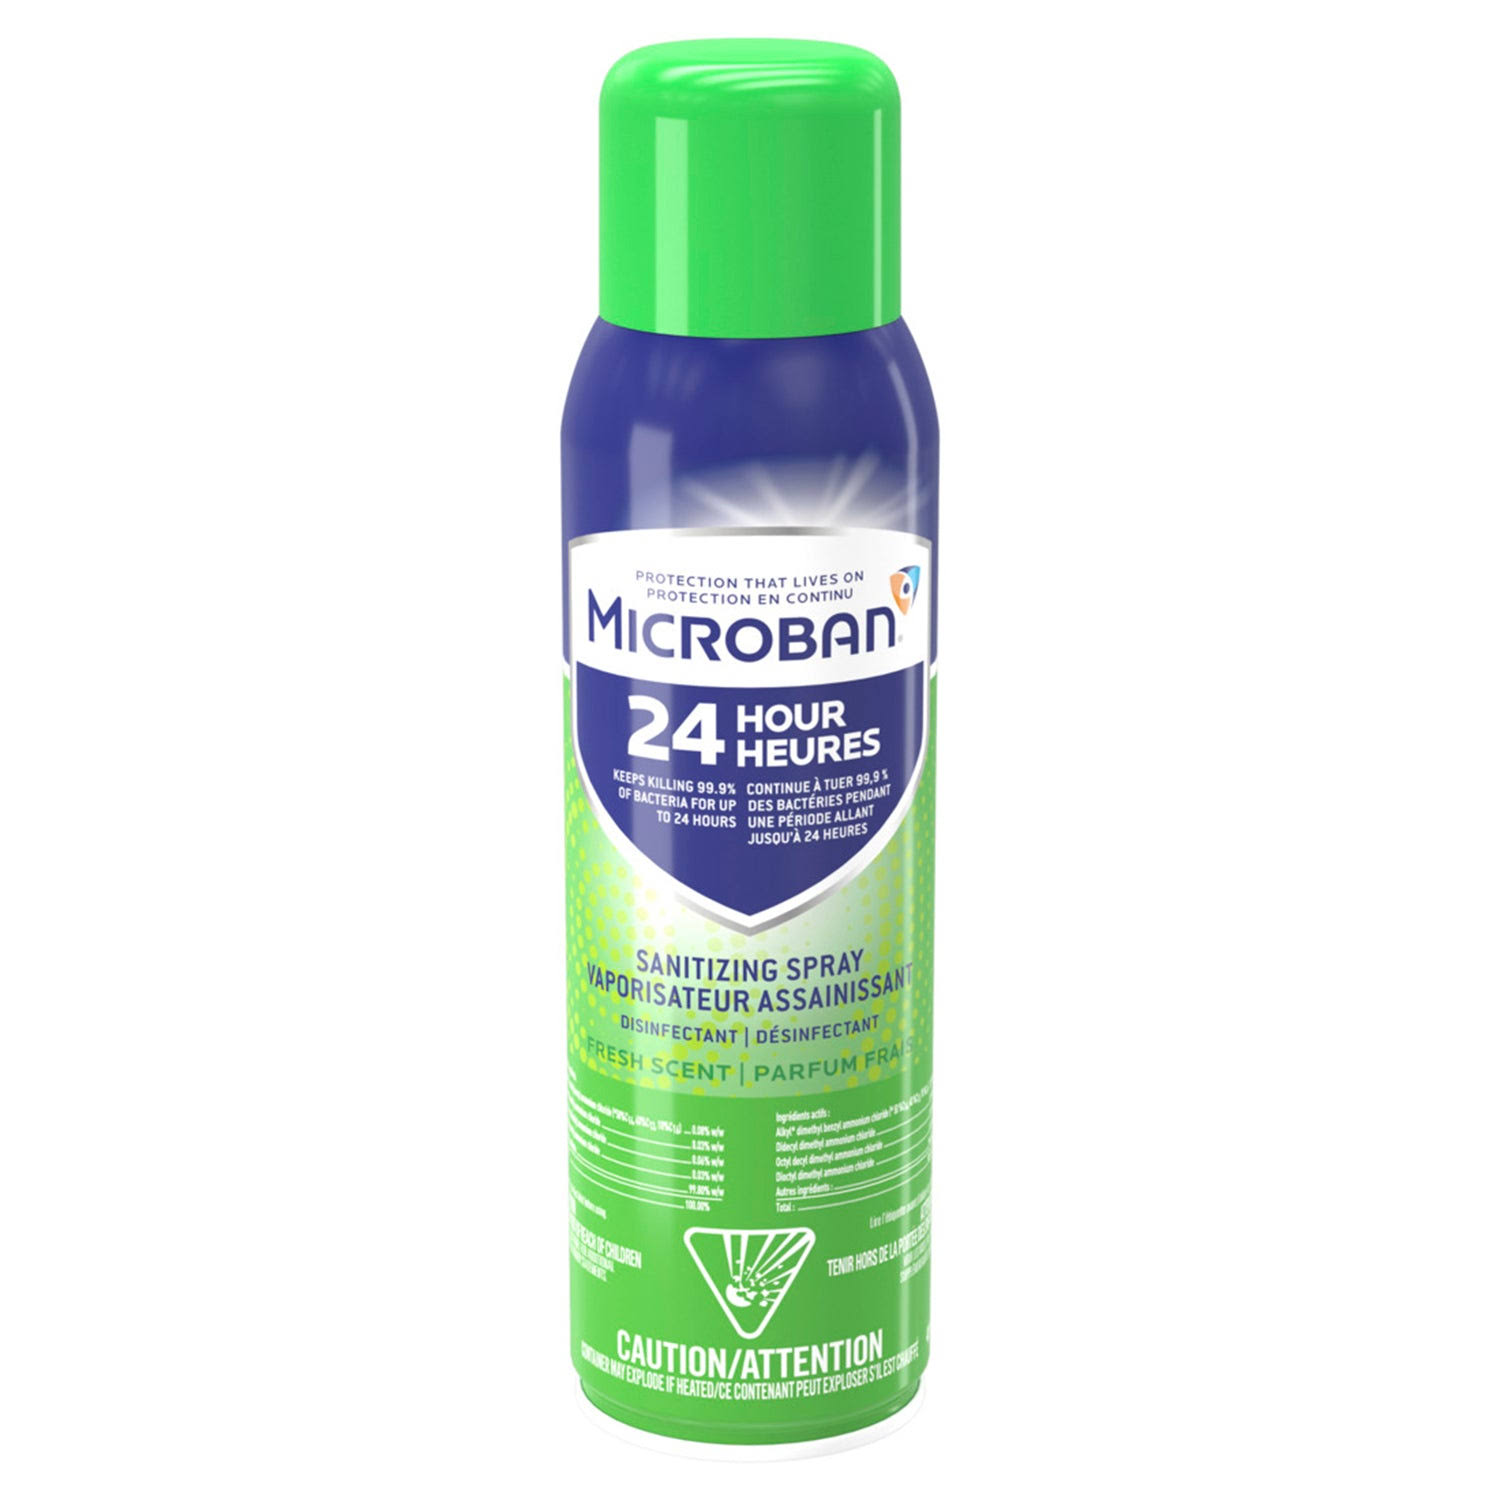 Microban 24 Hour Disinfectant Sanitizing Spray, Fresh Scent - 425.0 g